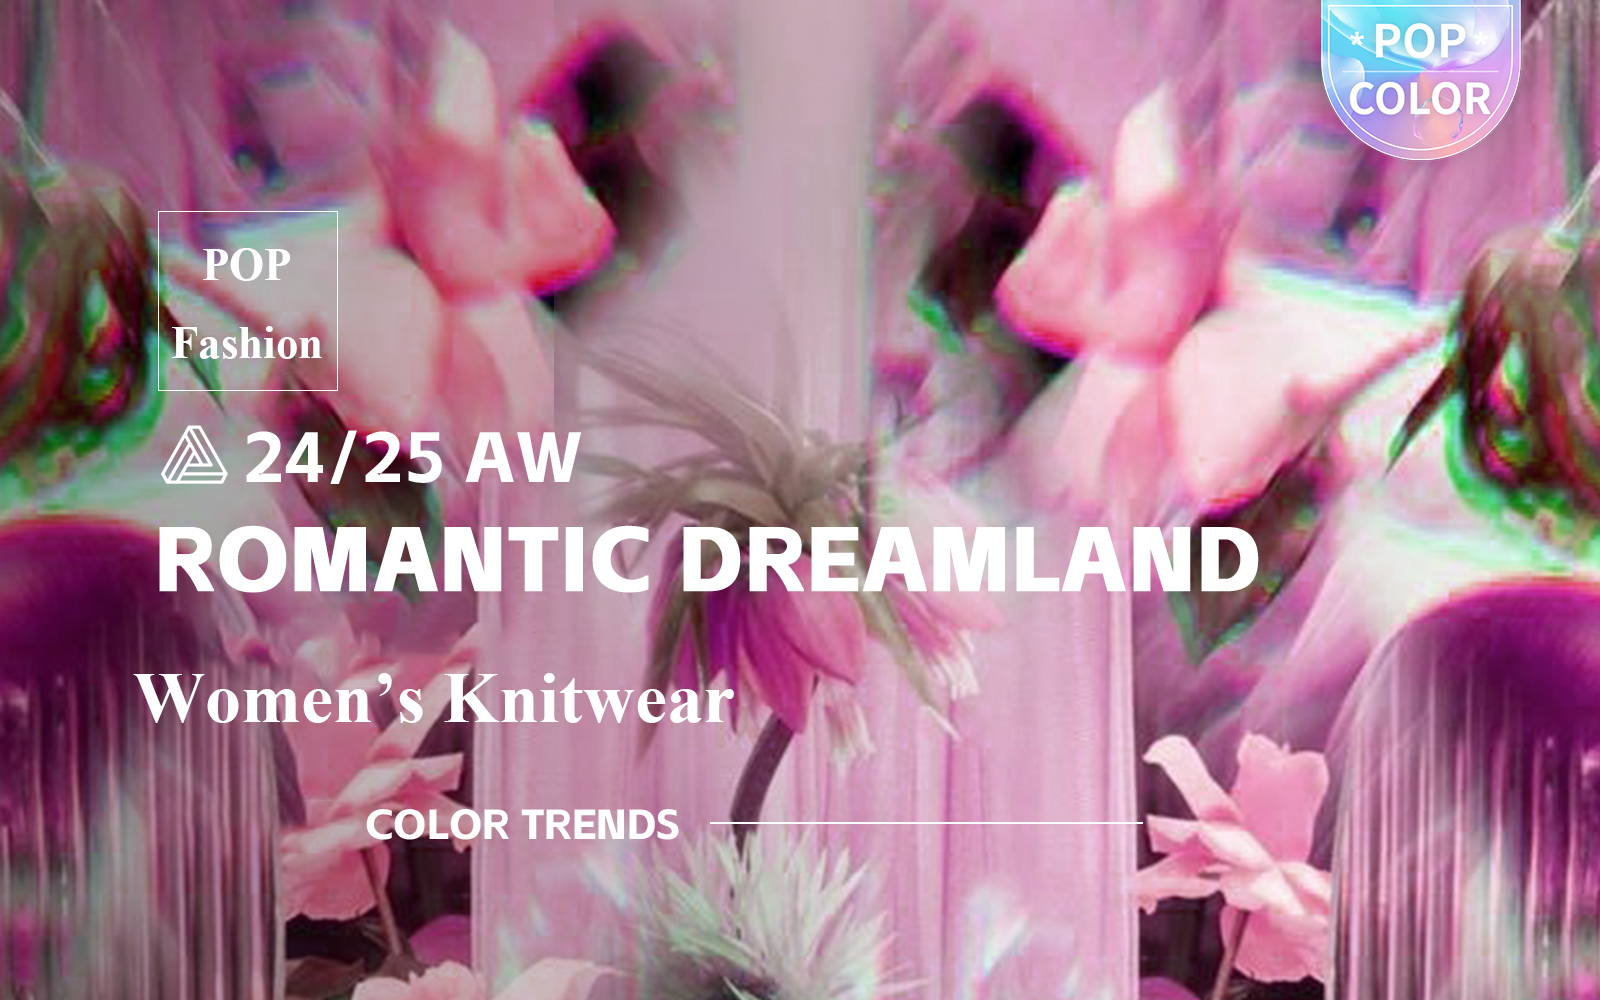 Romantic Dreams -- A/W 24/25 Color Trend for Women's Knitwear